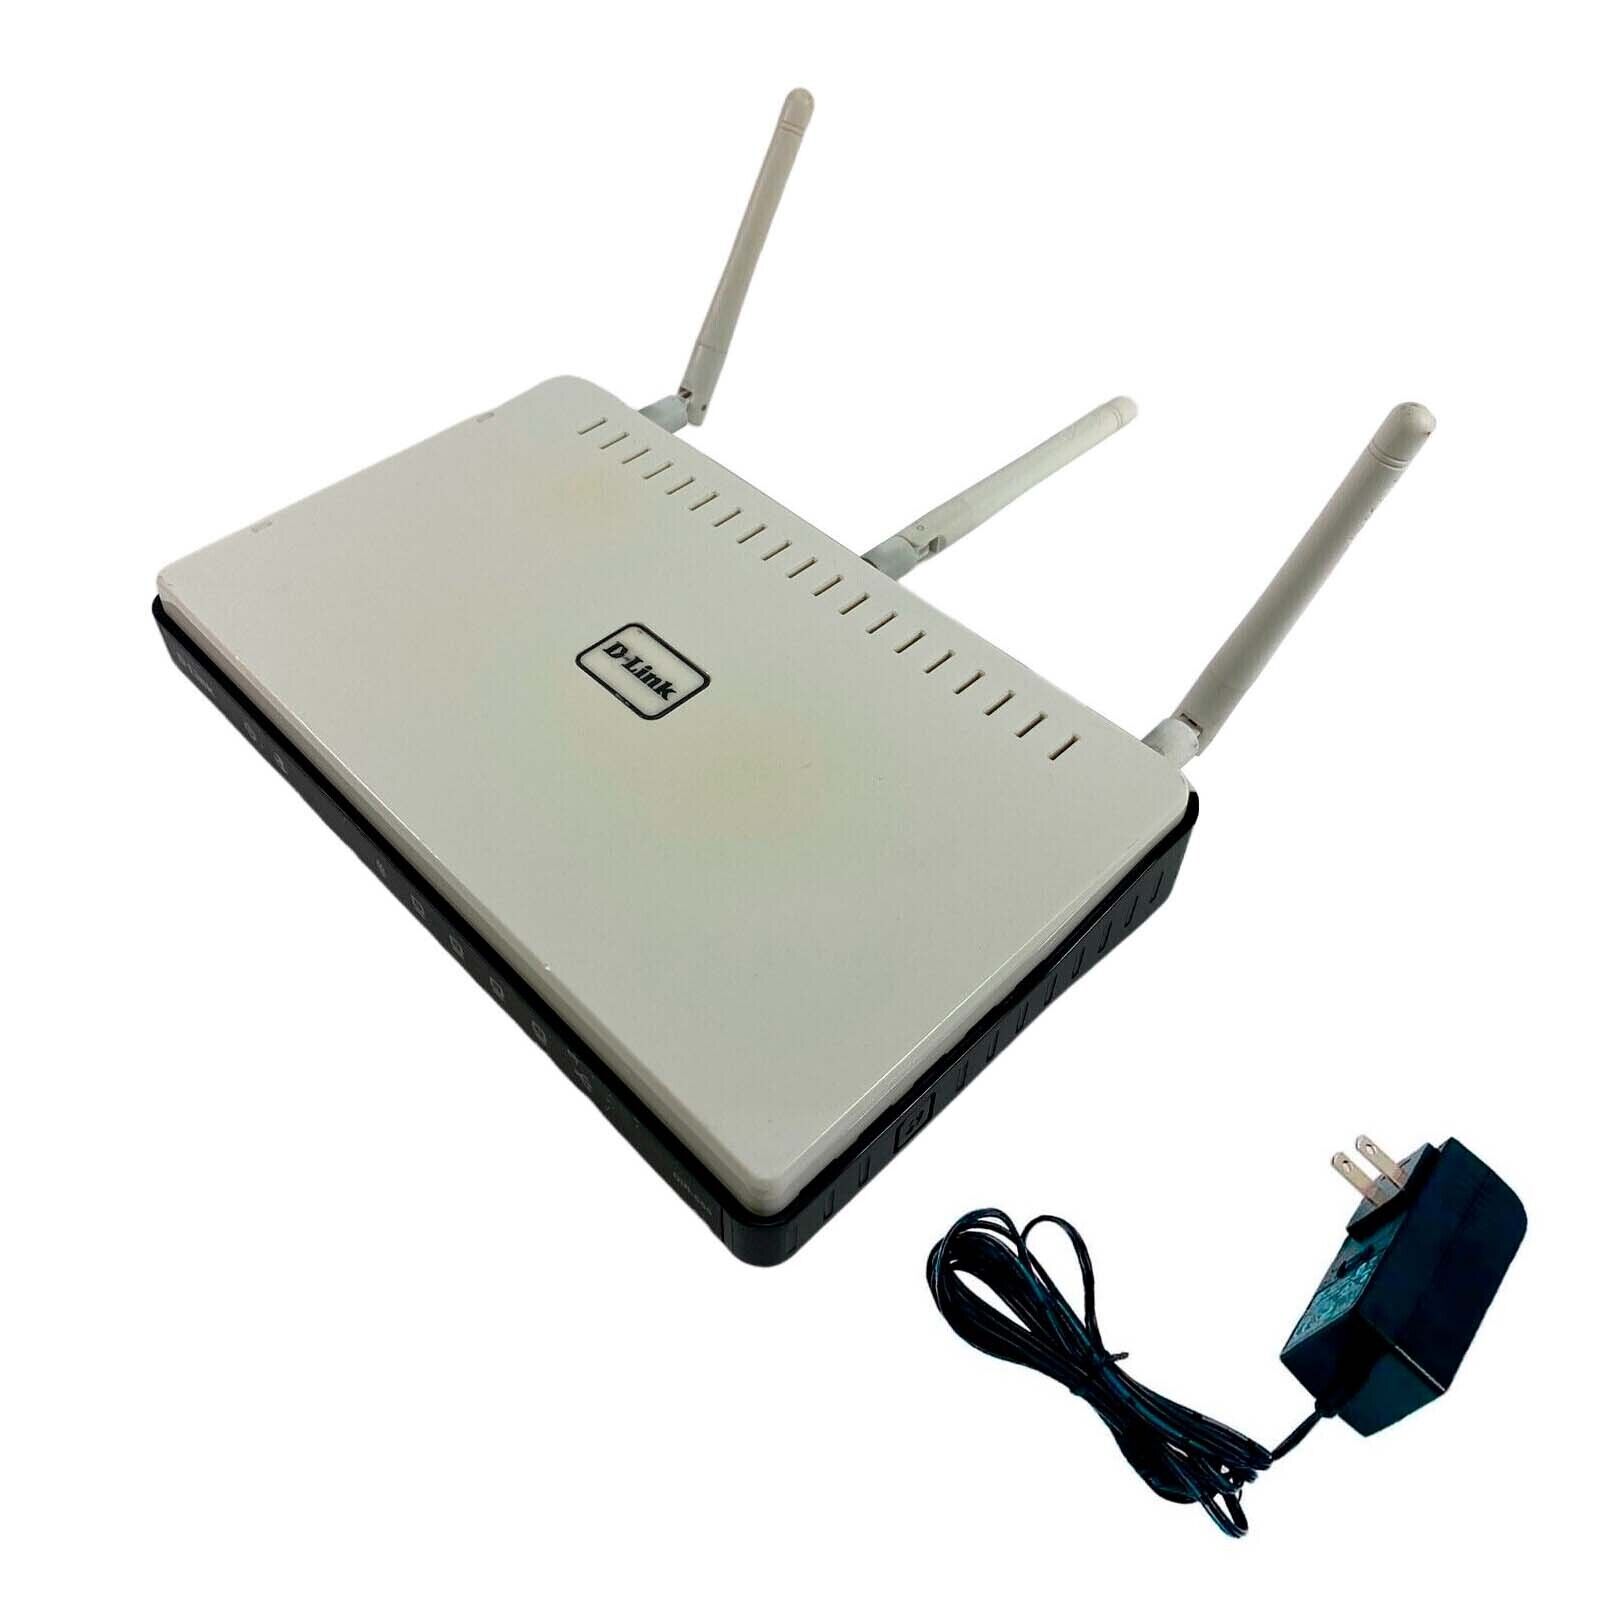 D-Link DIR-655 300 Mbps 4-Port Gigabit Wireless N Router w/ Adapter